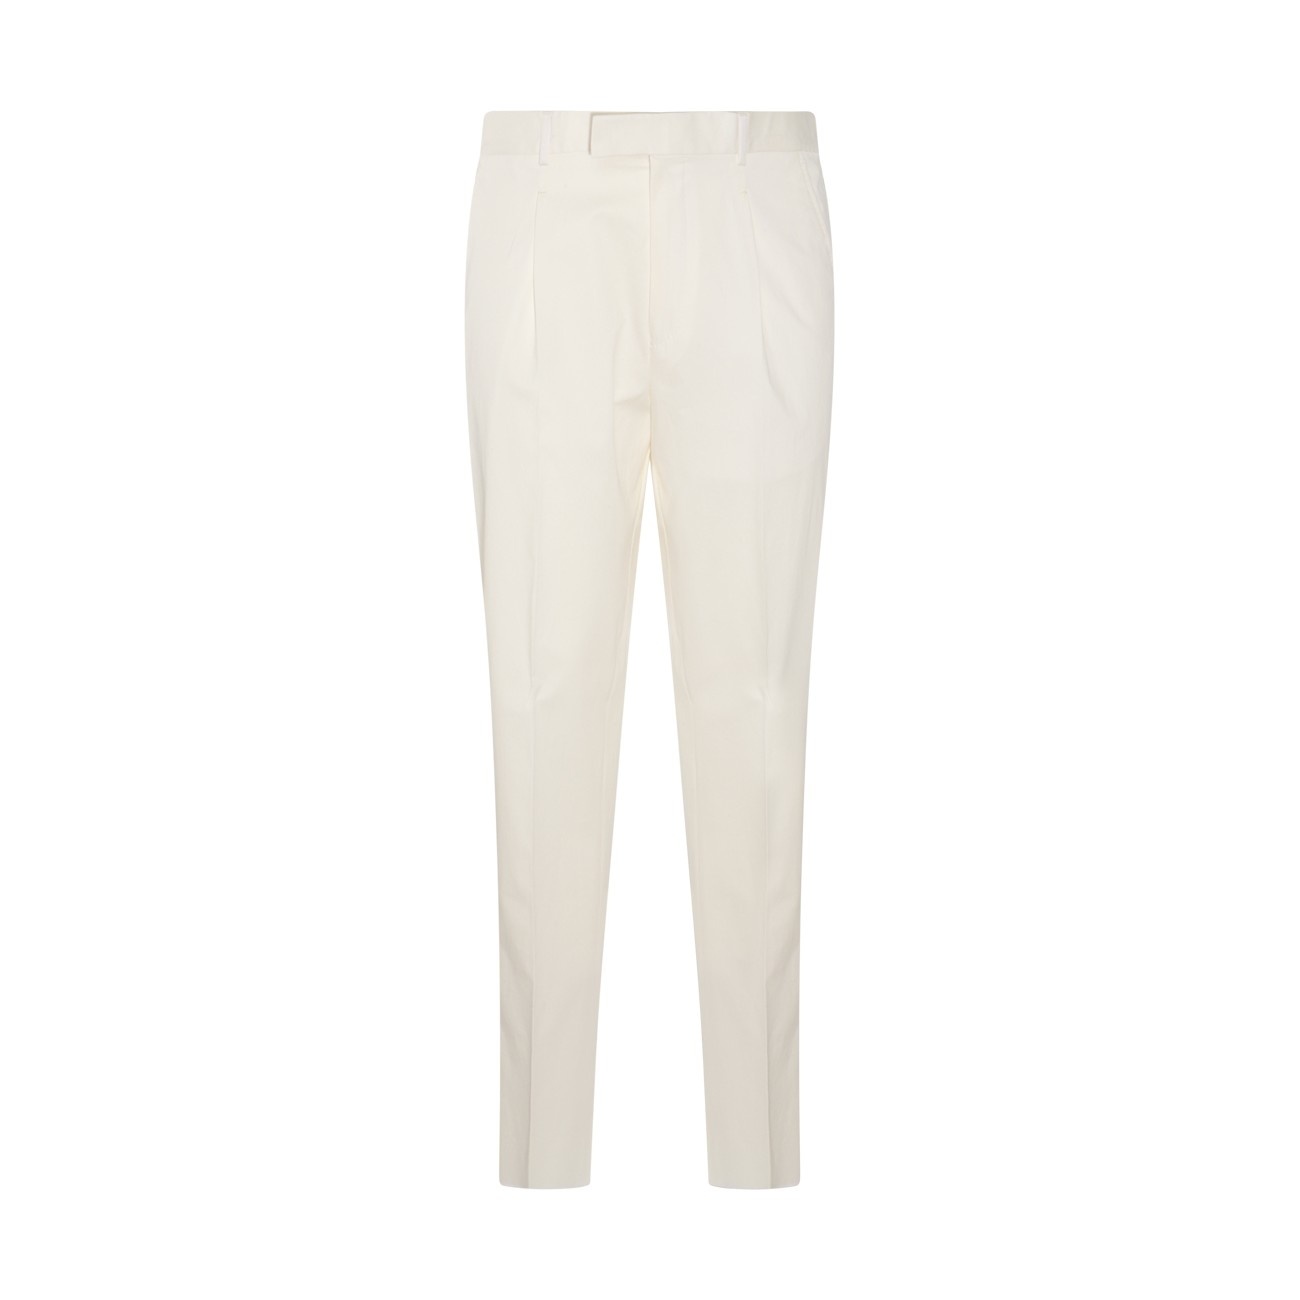 white cotton blend trousers - 1